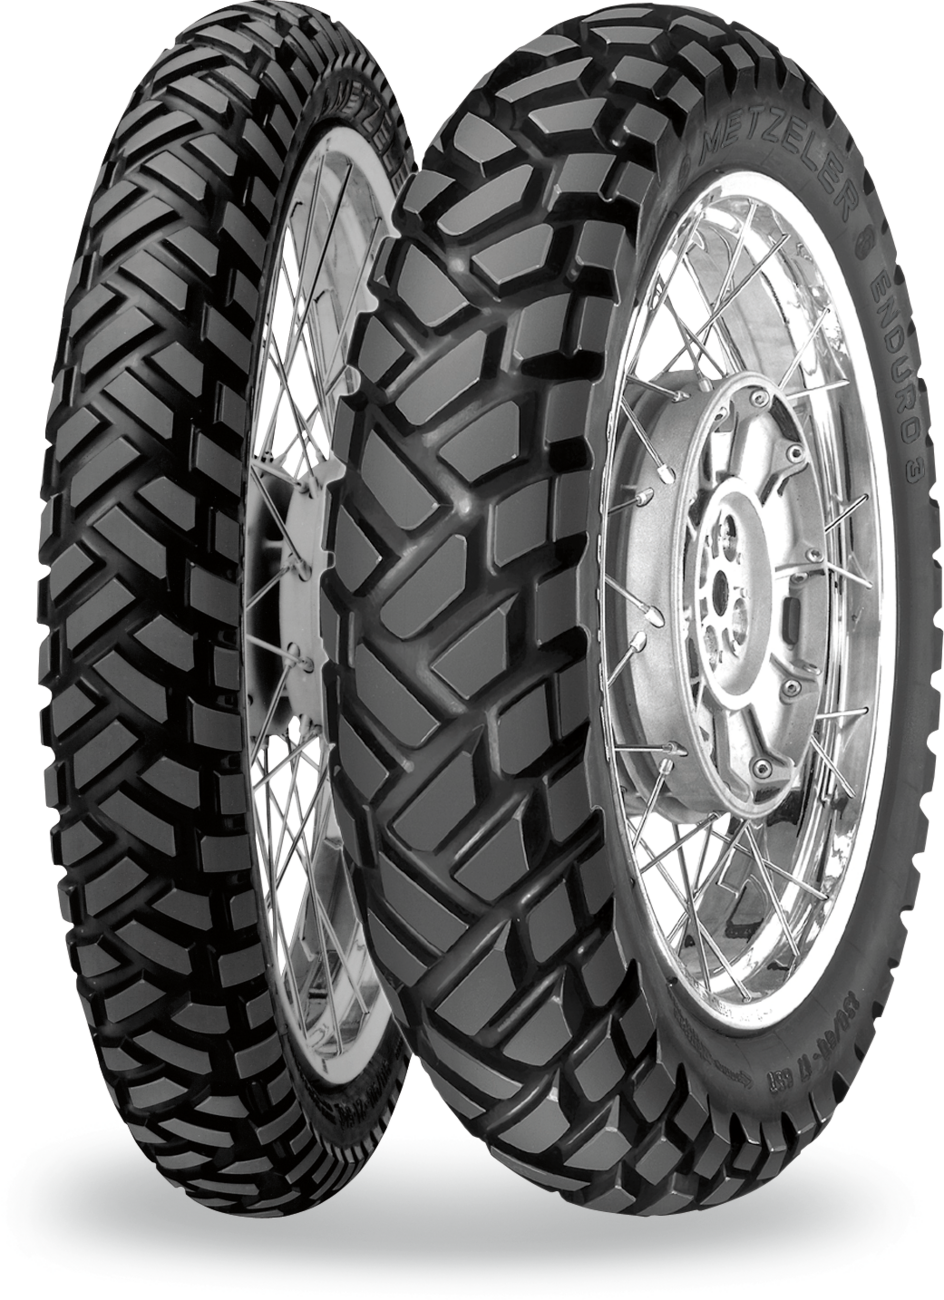 METZELER Tire - Enduro 3 Sahara - Rear - 120/80-18 - 62S 4148700